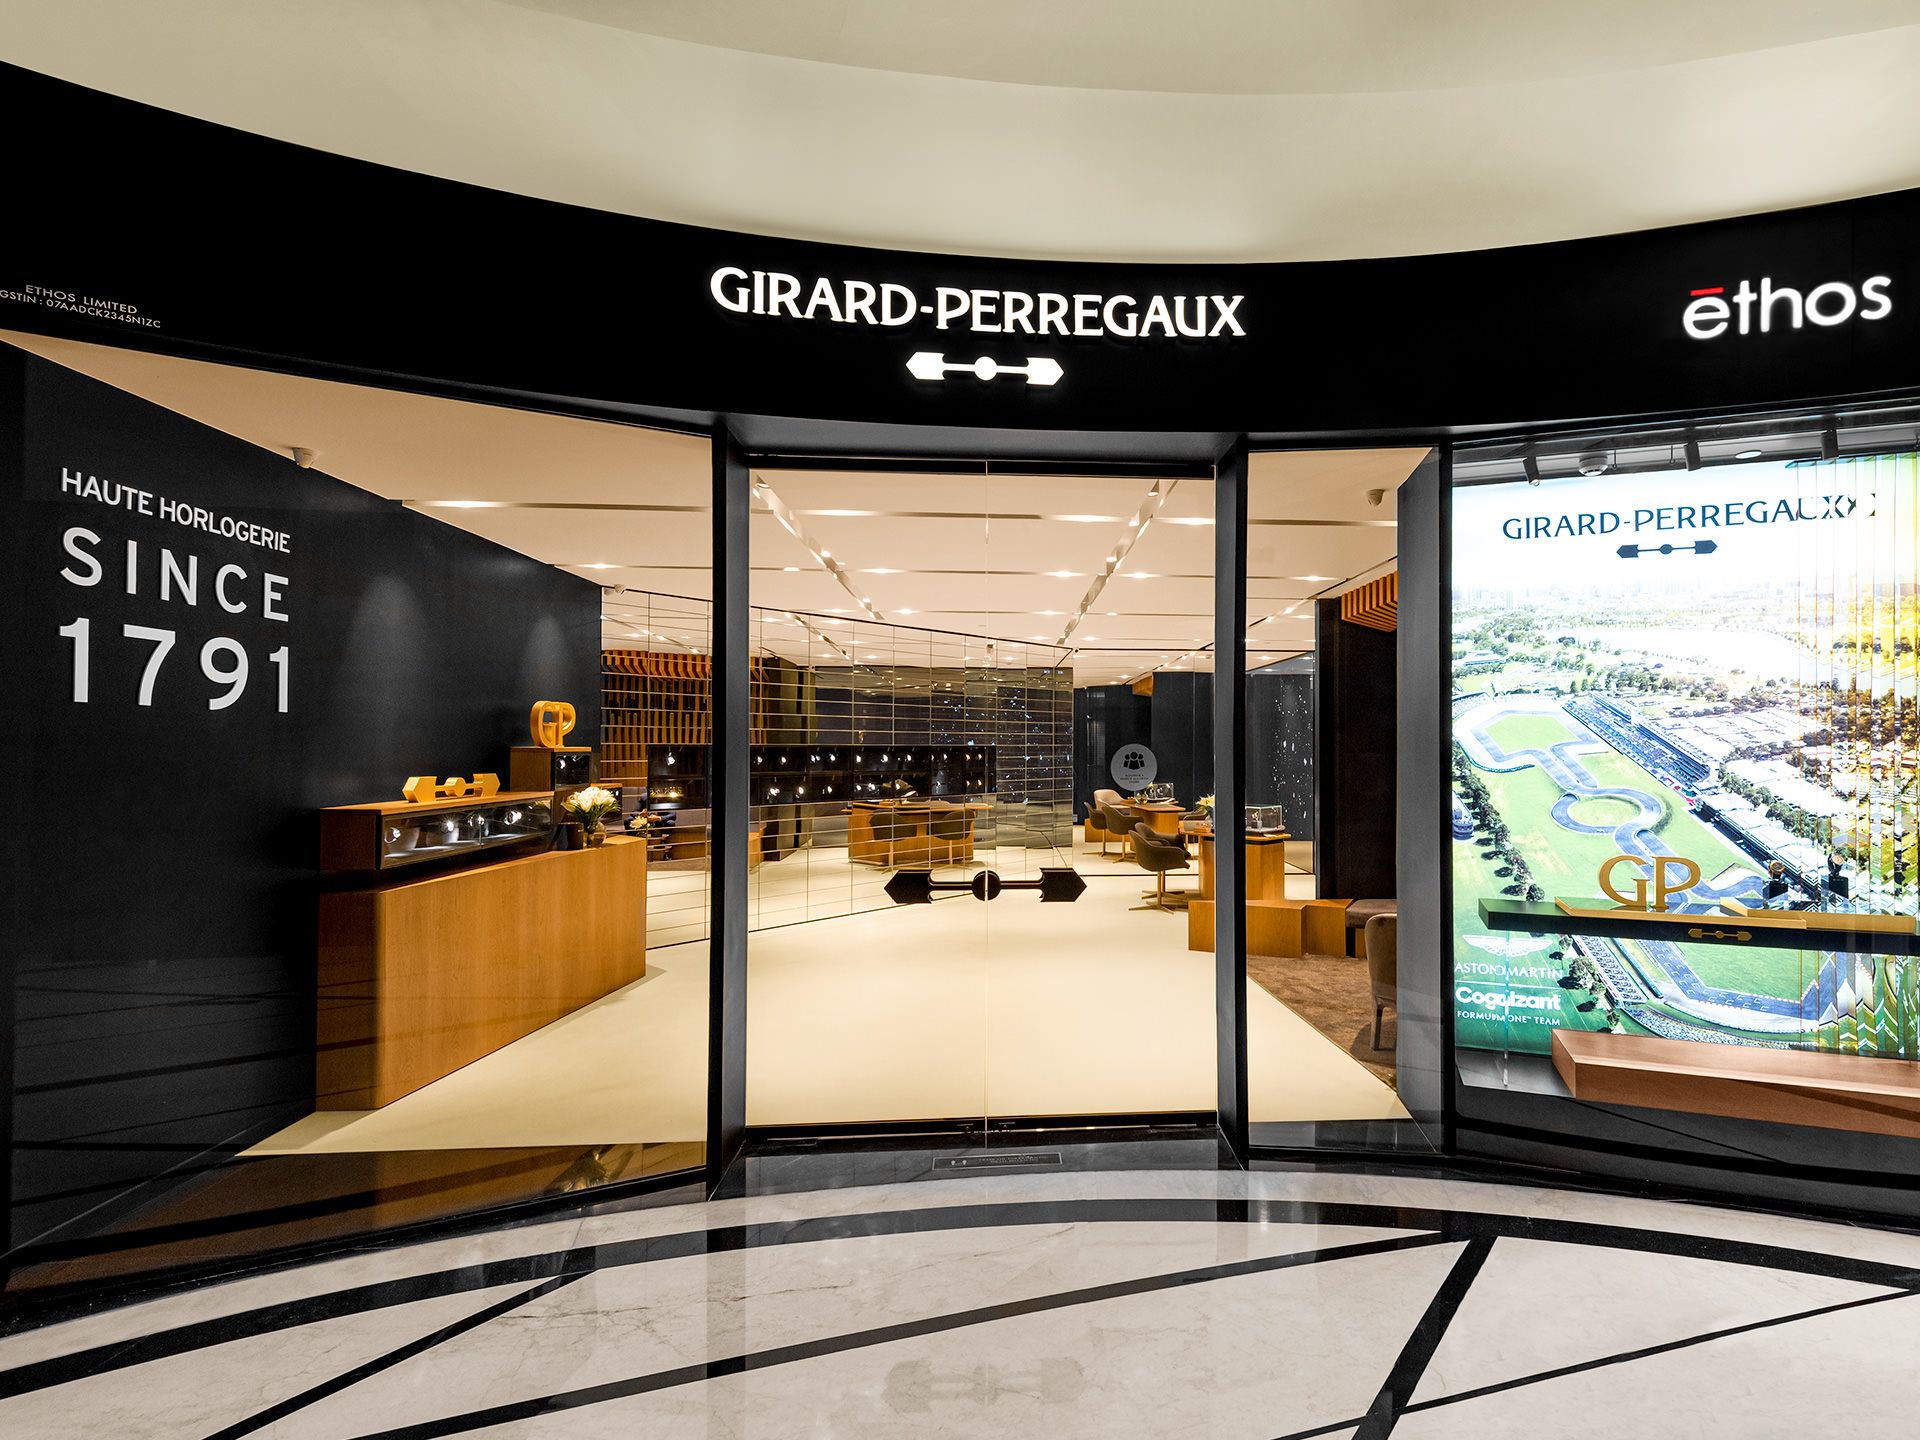 Girard Perregaux Boutique - Ethos Watches, New Delhi, Delhi